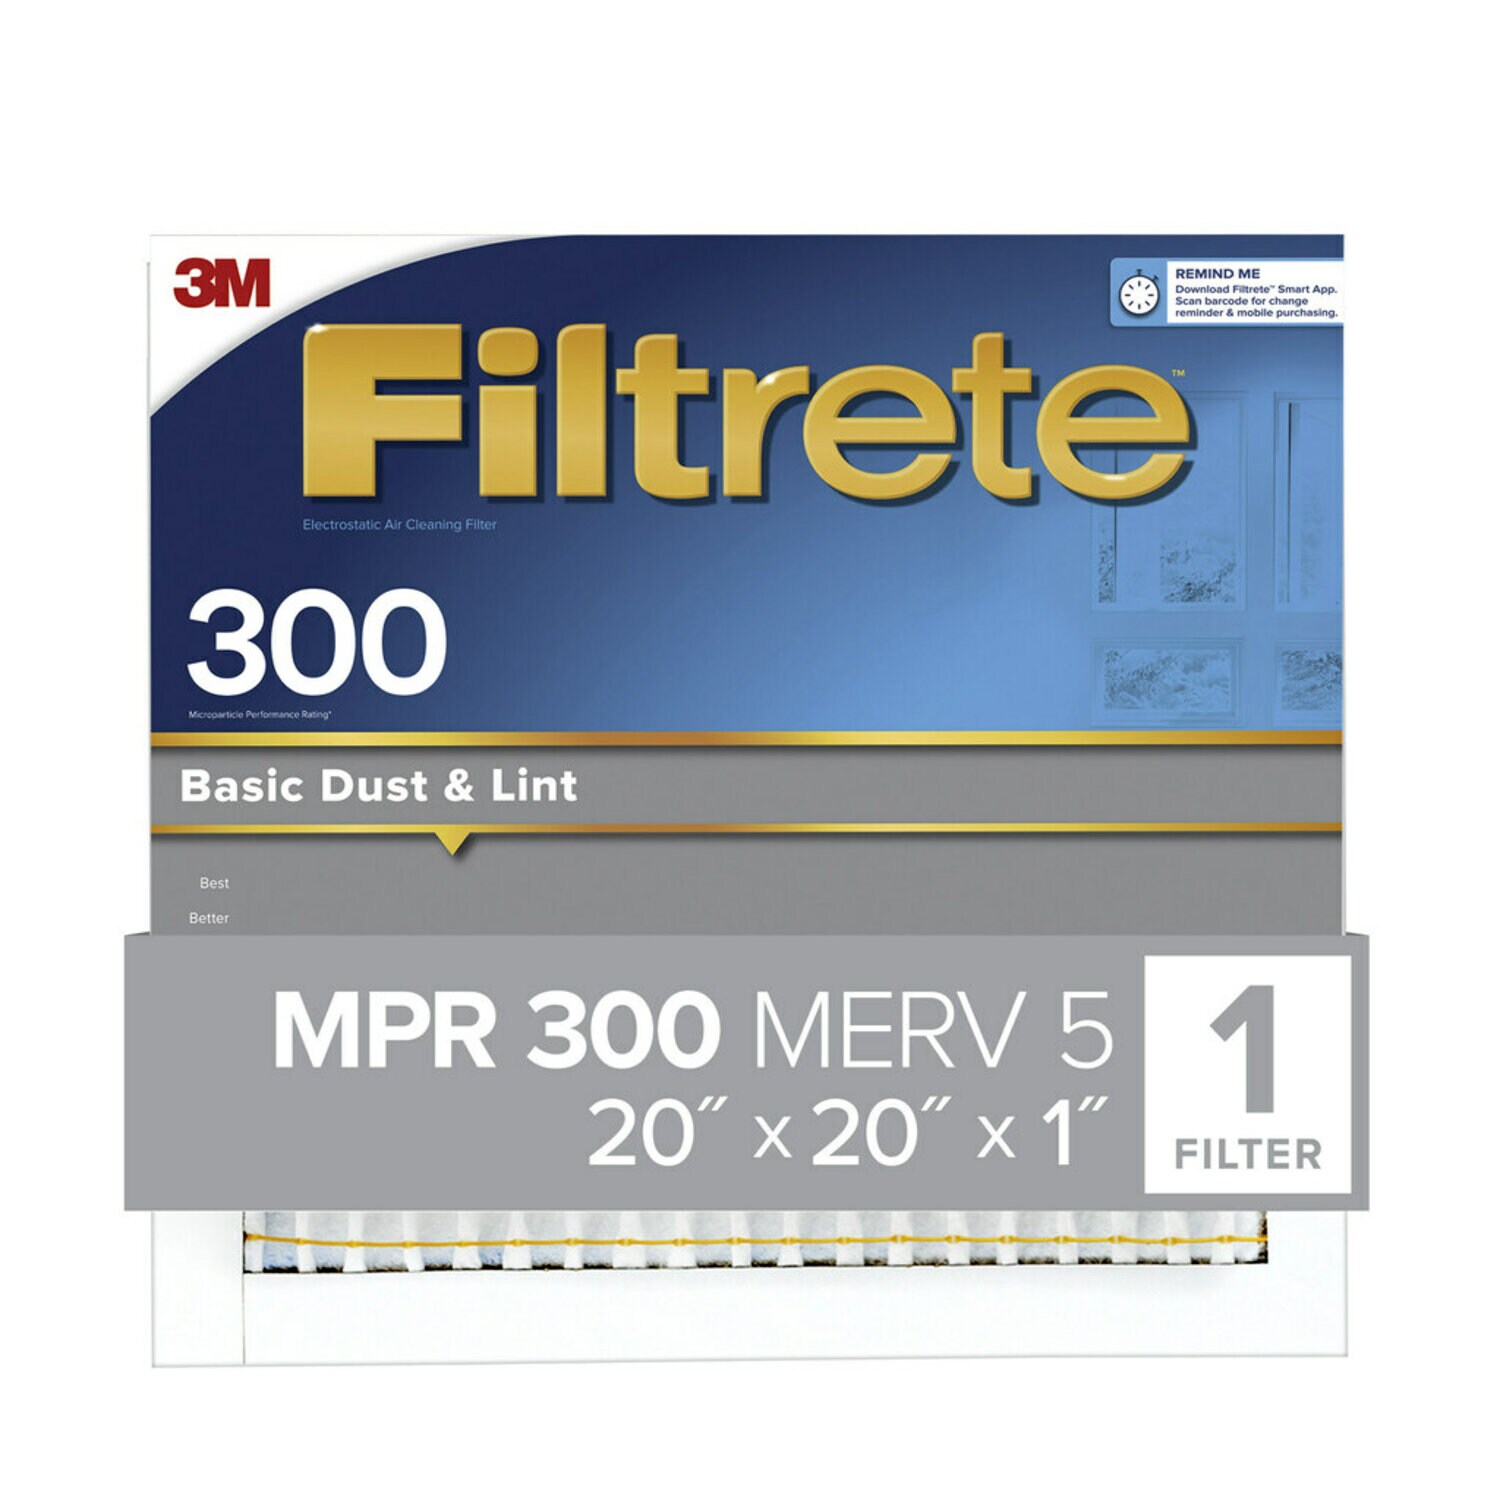 7100184015 - Filtrete Basic Dust & Lint Air Filter, 300 MPR, 302-4, 20 in x 20 in x
1 in (50.8 cm x 50.8 cm x 2.5 cm)